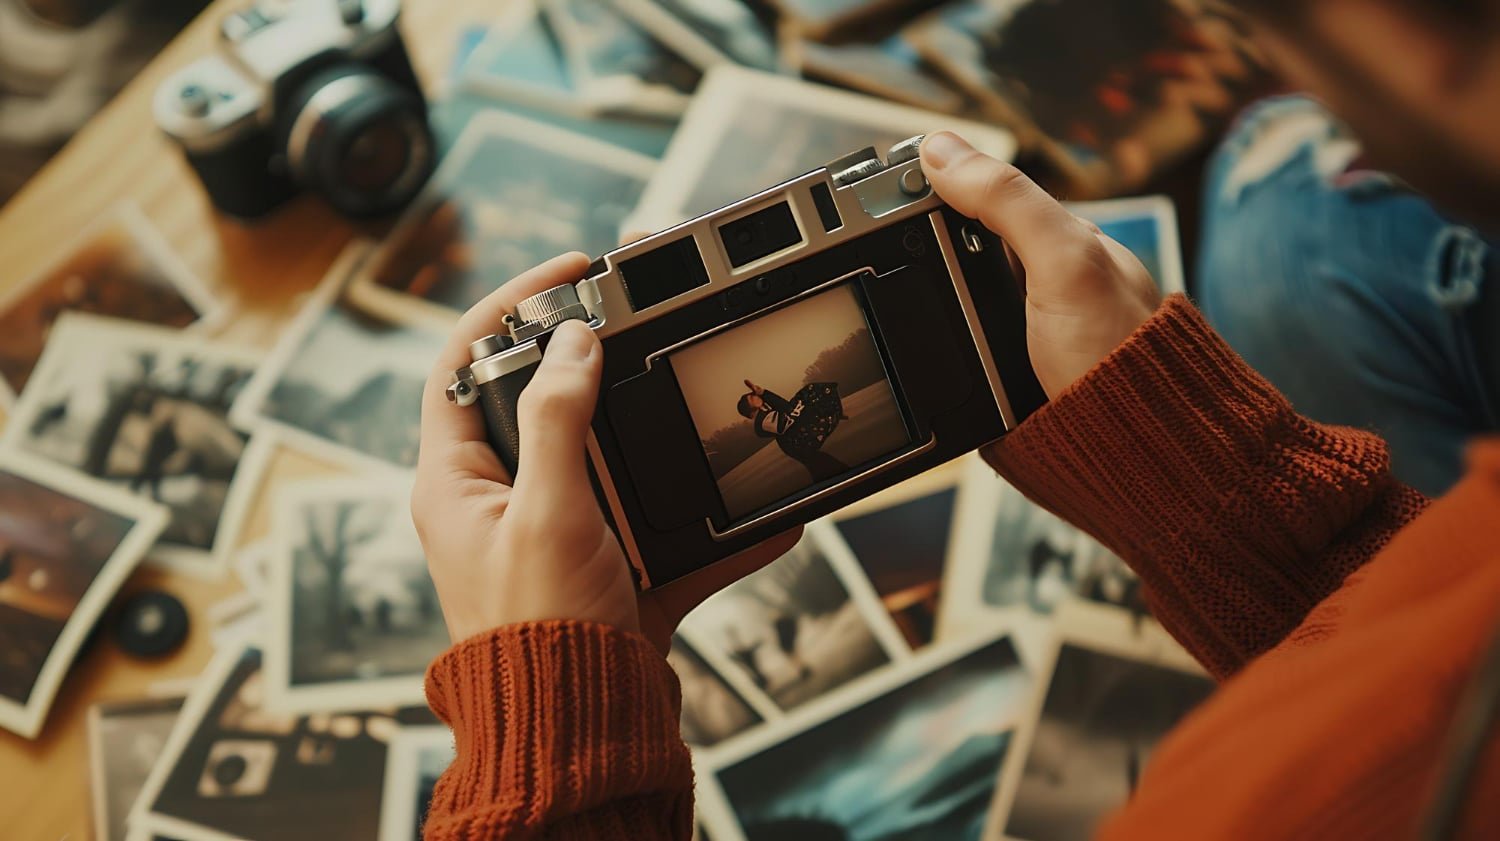 Create Instant Memories With Polaroid’s Iconic Instant Cameras